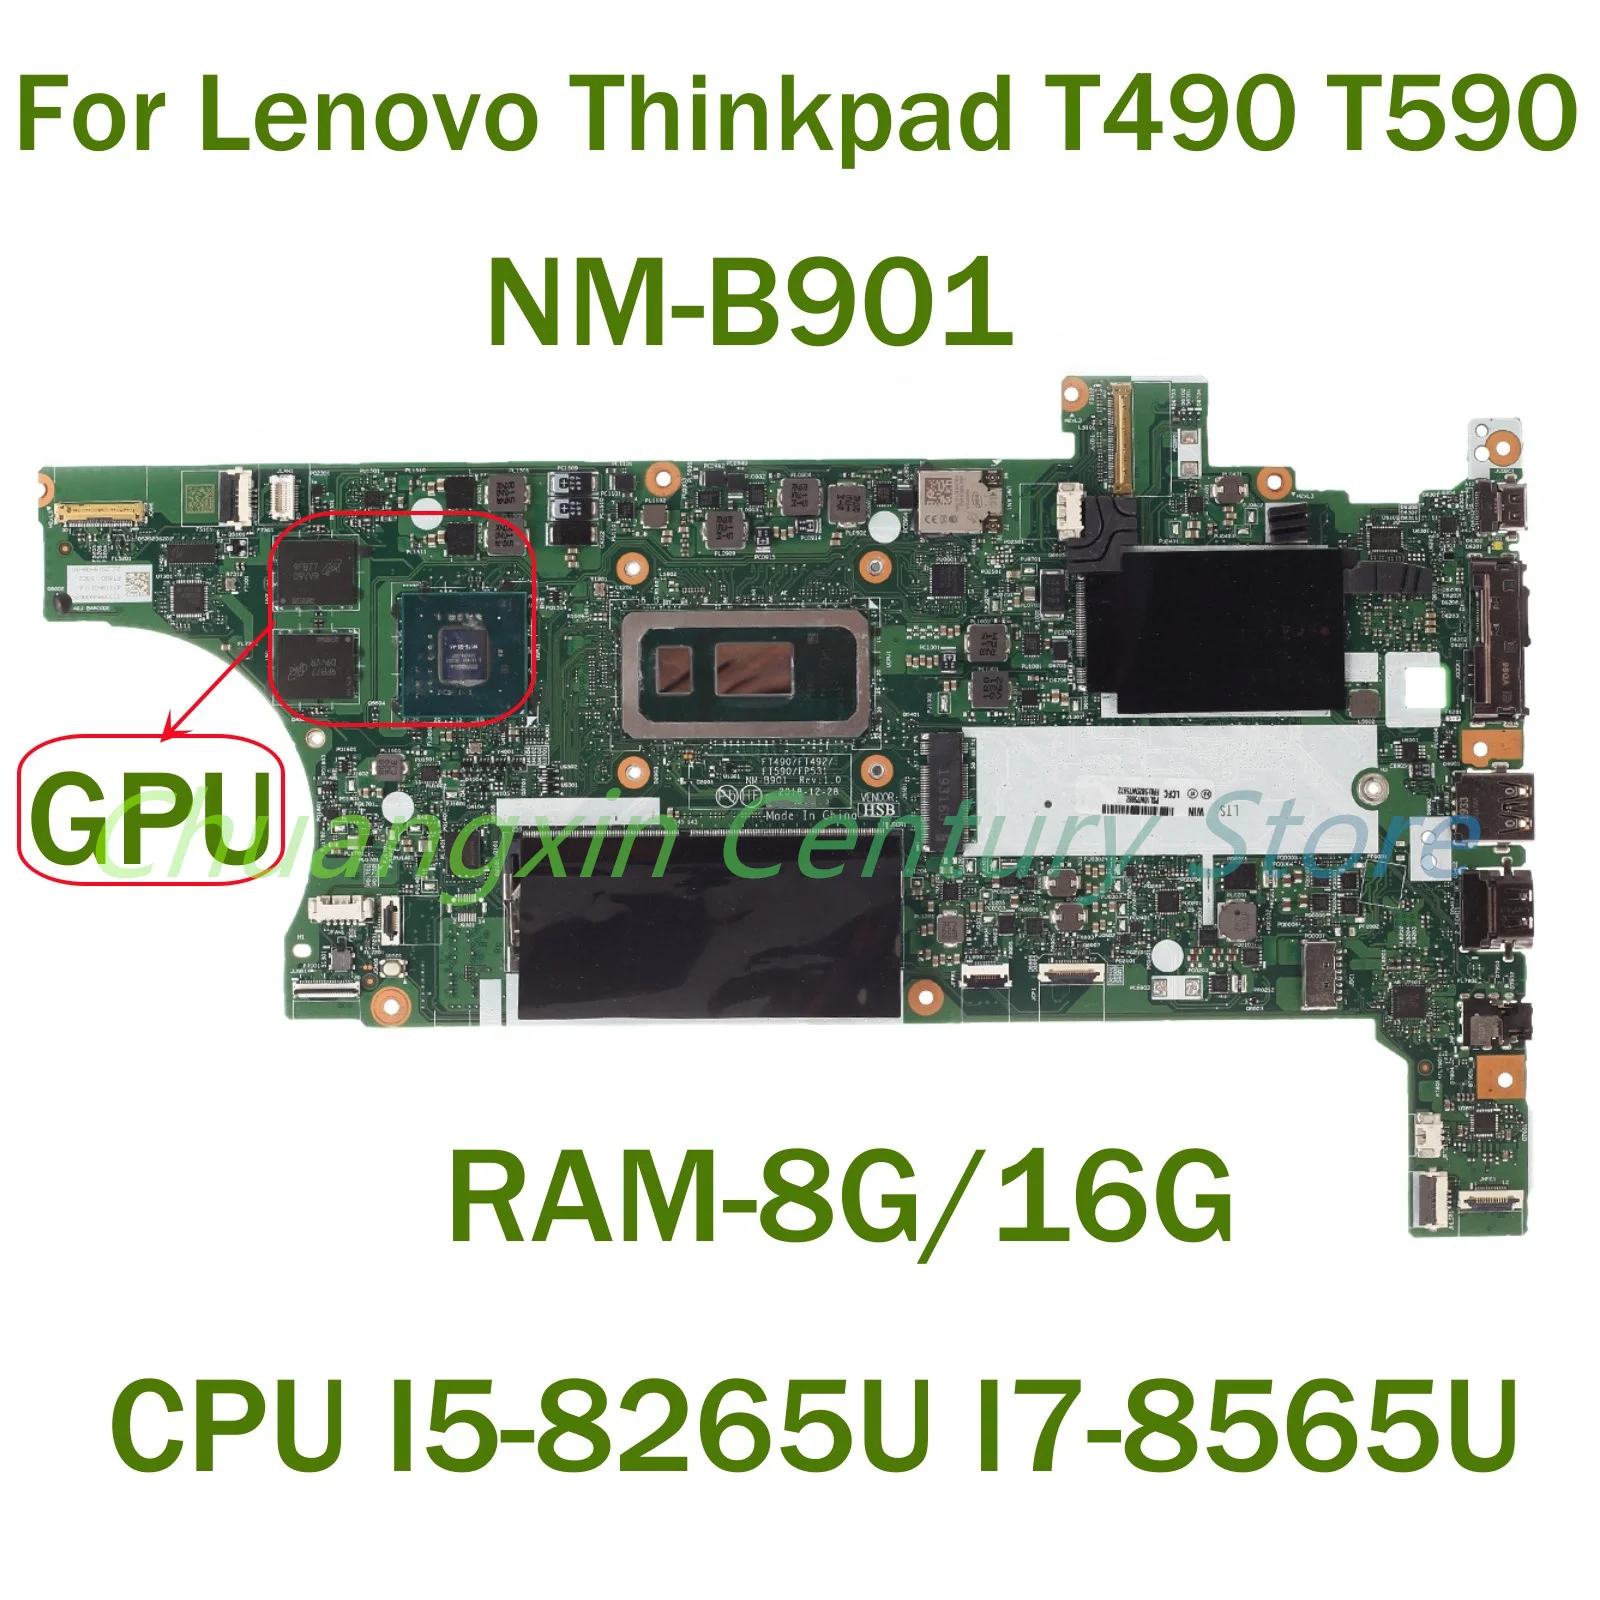 

For Lenovo Thinkpad T490 T590 Laptop motherboard NM-B901 with CPU I5-8265U I7-8565U RAM: 16GB/8GB 100% Tested Fully Work